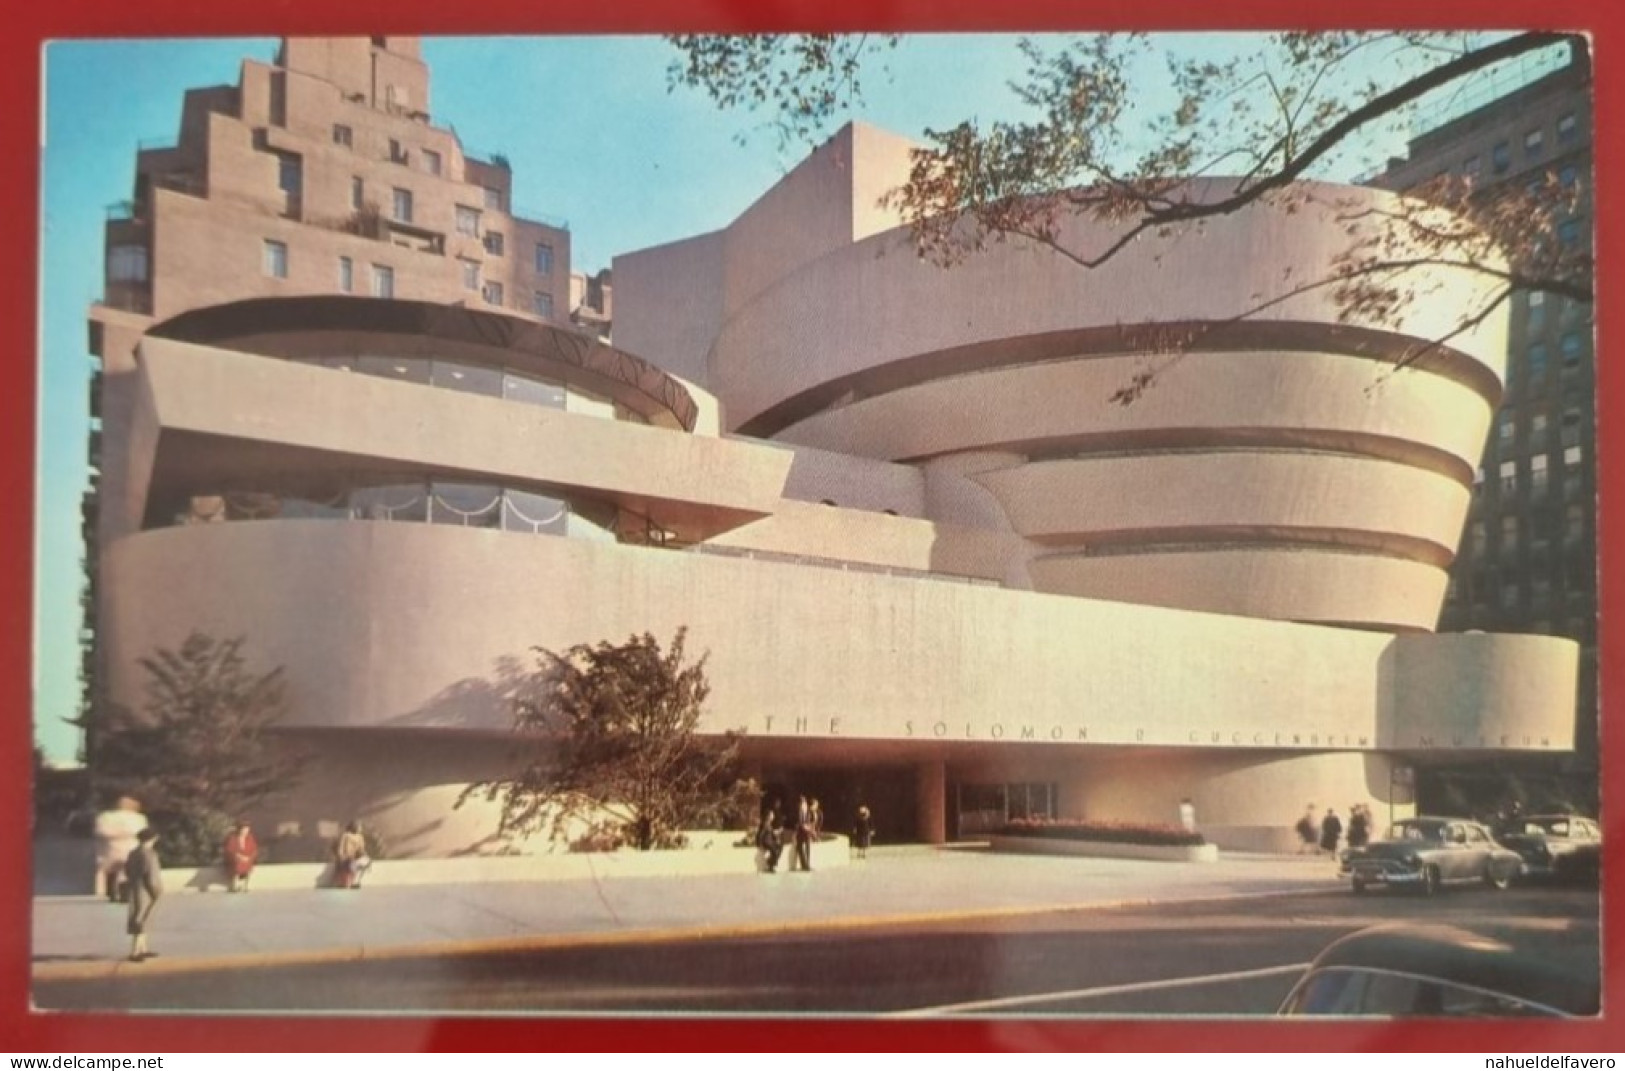 Uncirculated Postcard - USA - NY, NEW YORK CITY - THE SOLOMAN R. GUGGENHEIM MUSEUM - Musea